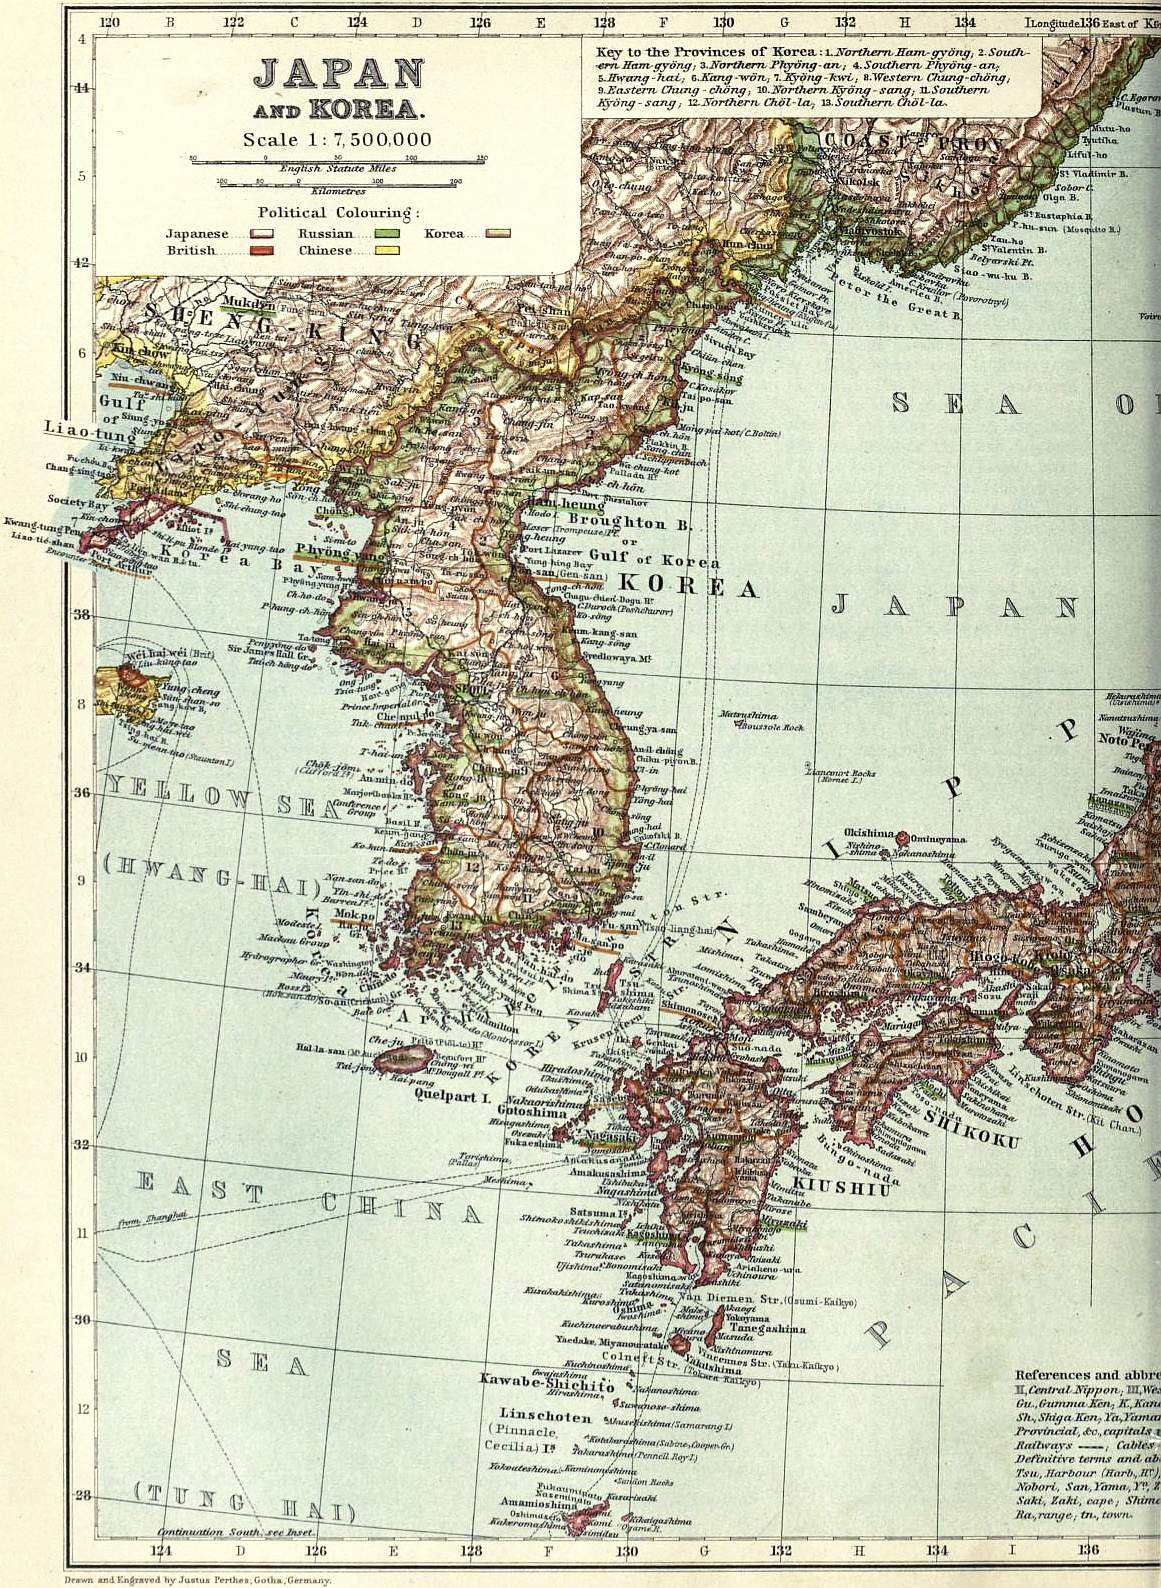 The Project Gutenberg eBook of Encyclopædia Britannica, Volume XV Slice II  - Jacobites to Japan (part).